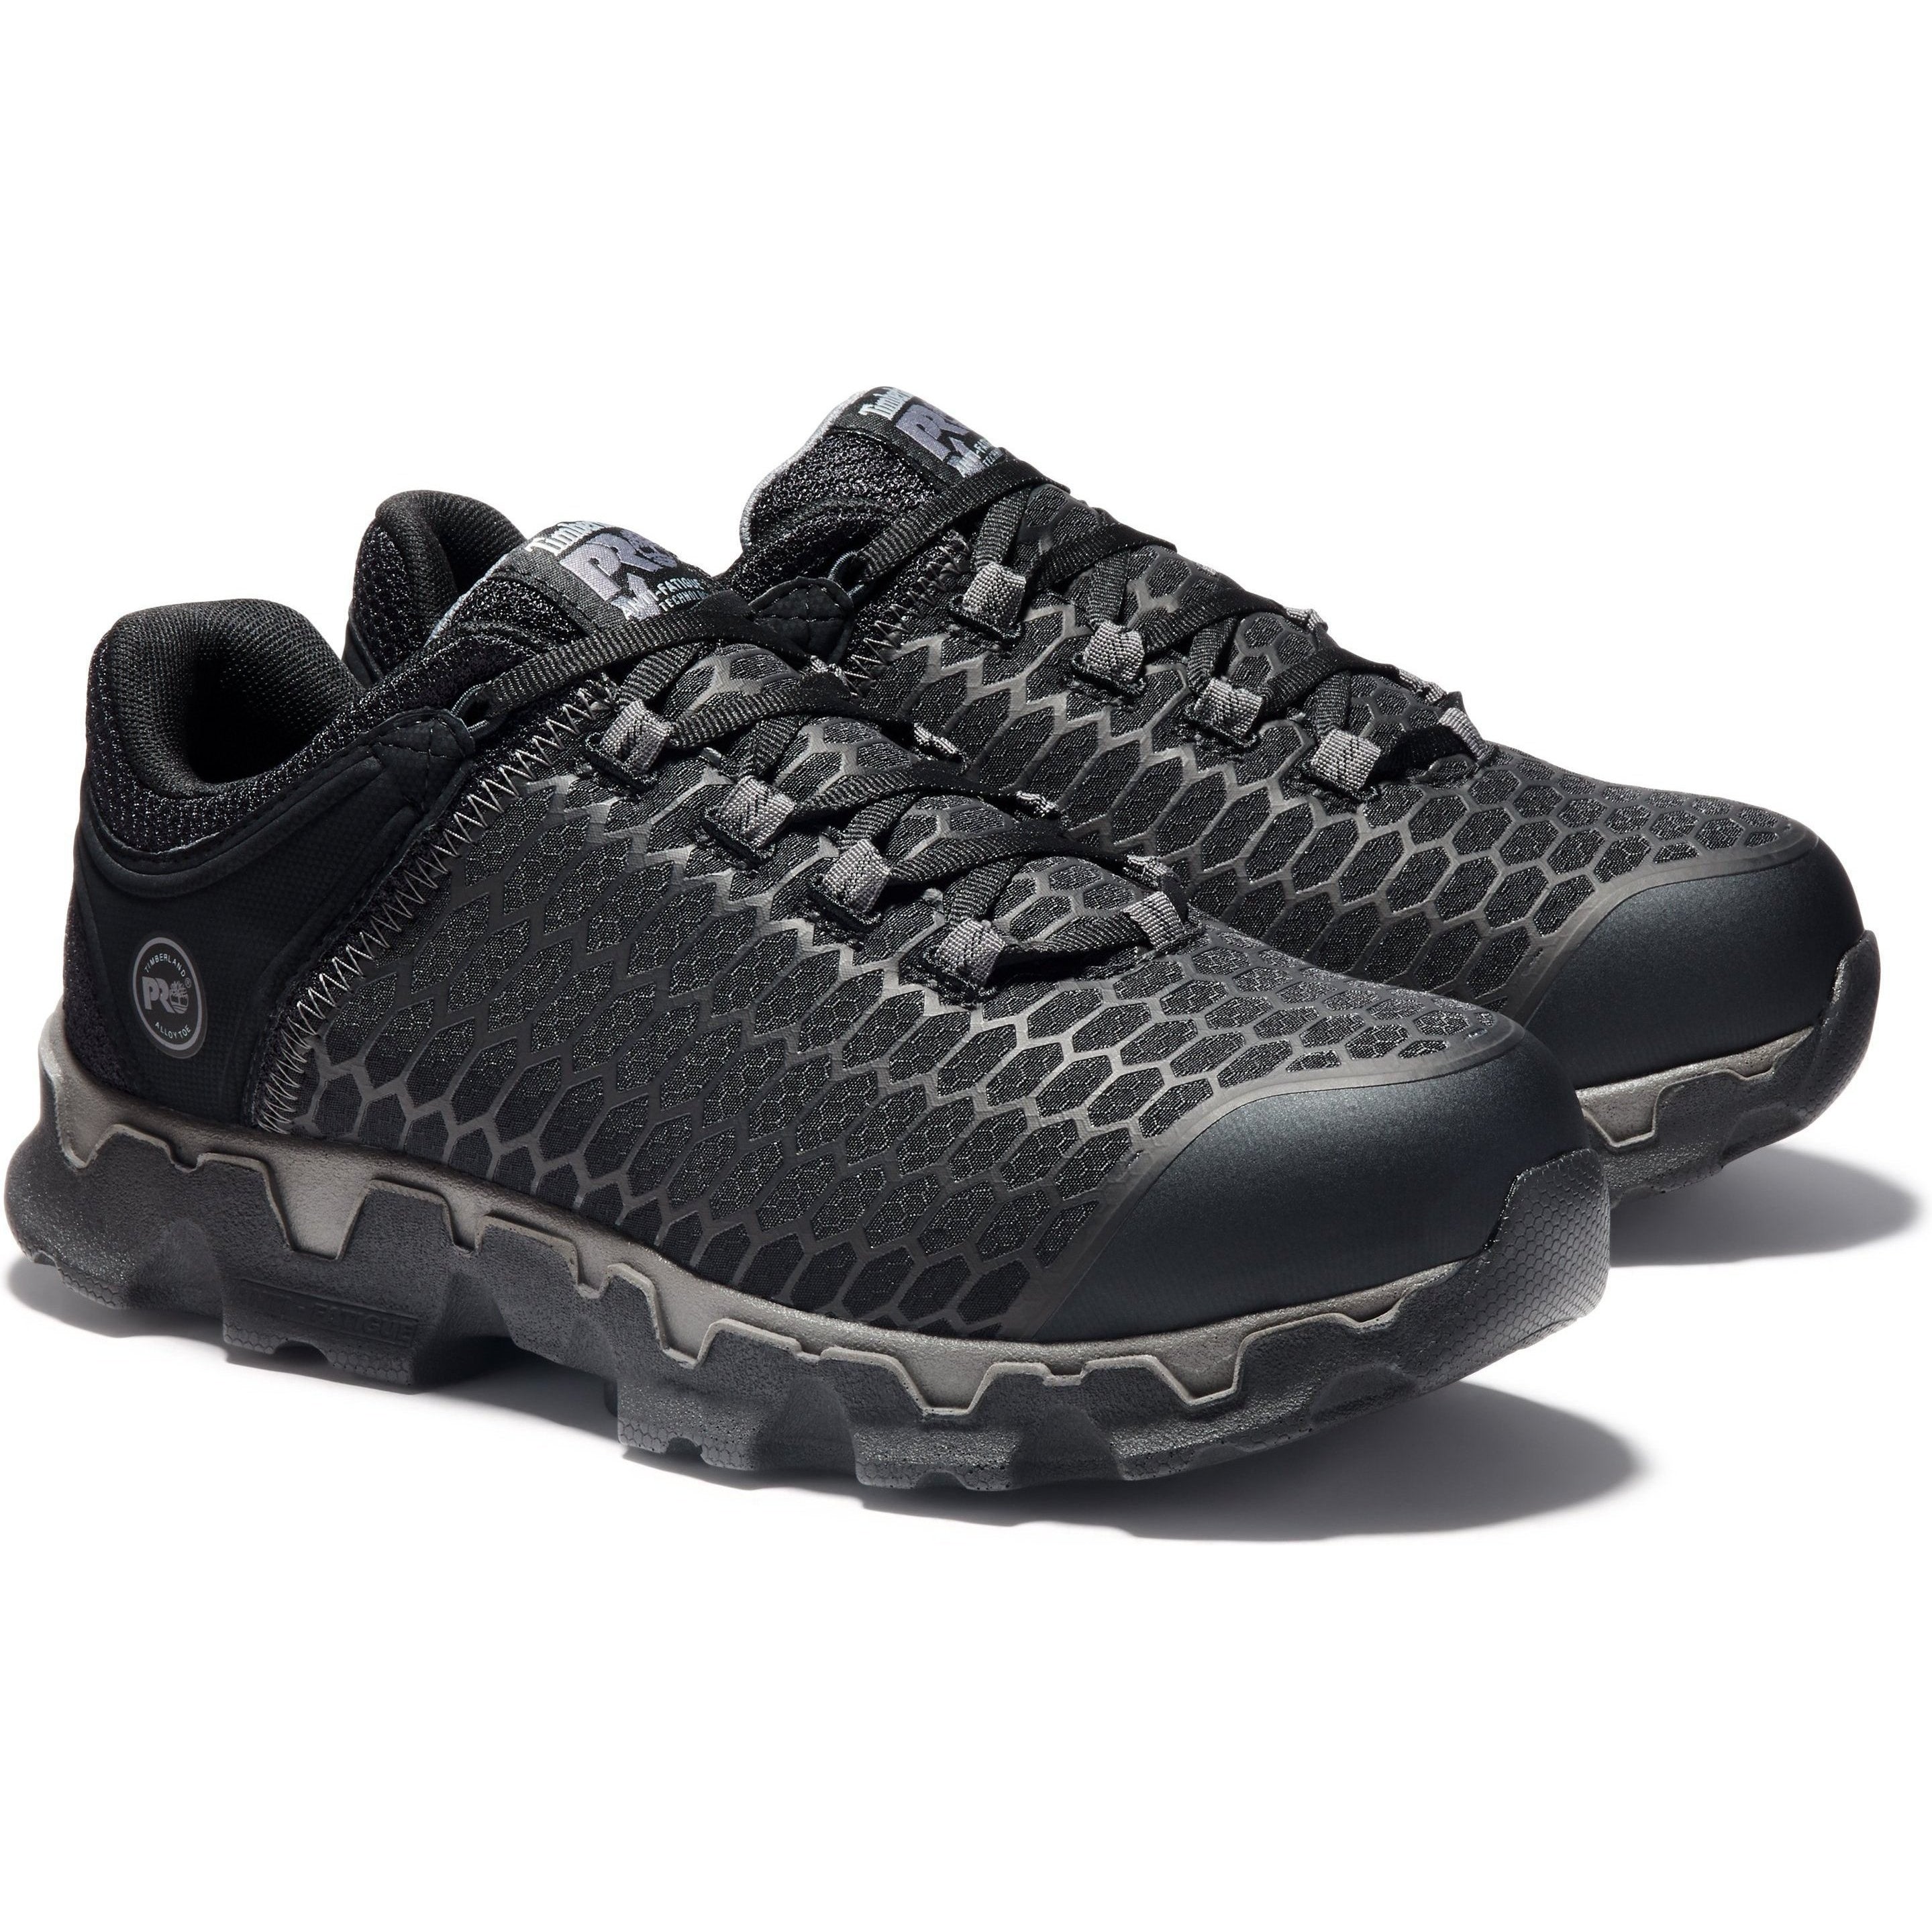 Timberland PRO Men's Powertrain Sport SD+ Alloy Toe Work Shoe TB0A1B6U001 7 / Medium / Black Ripstop Nylon - Overlook Boots